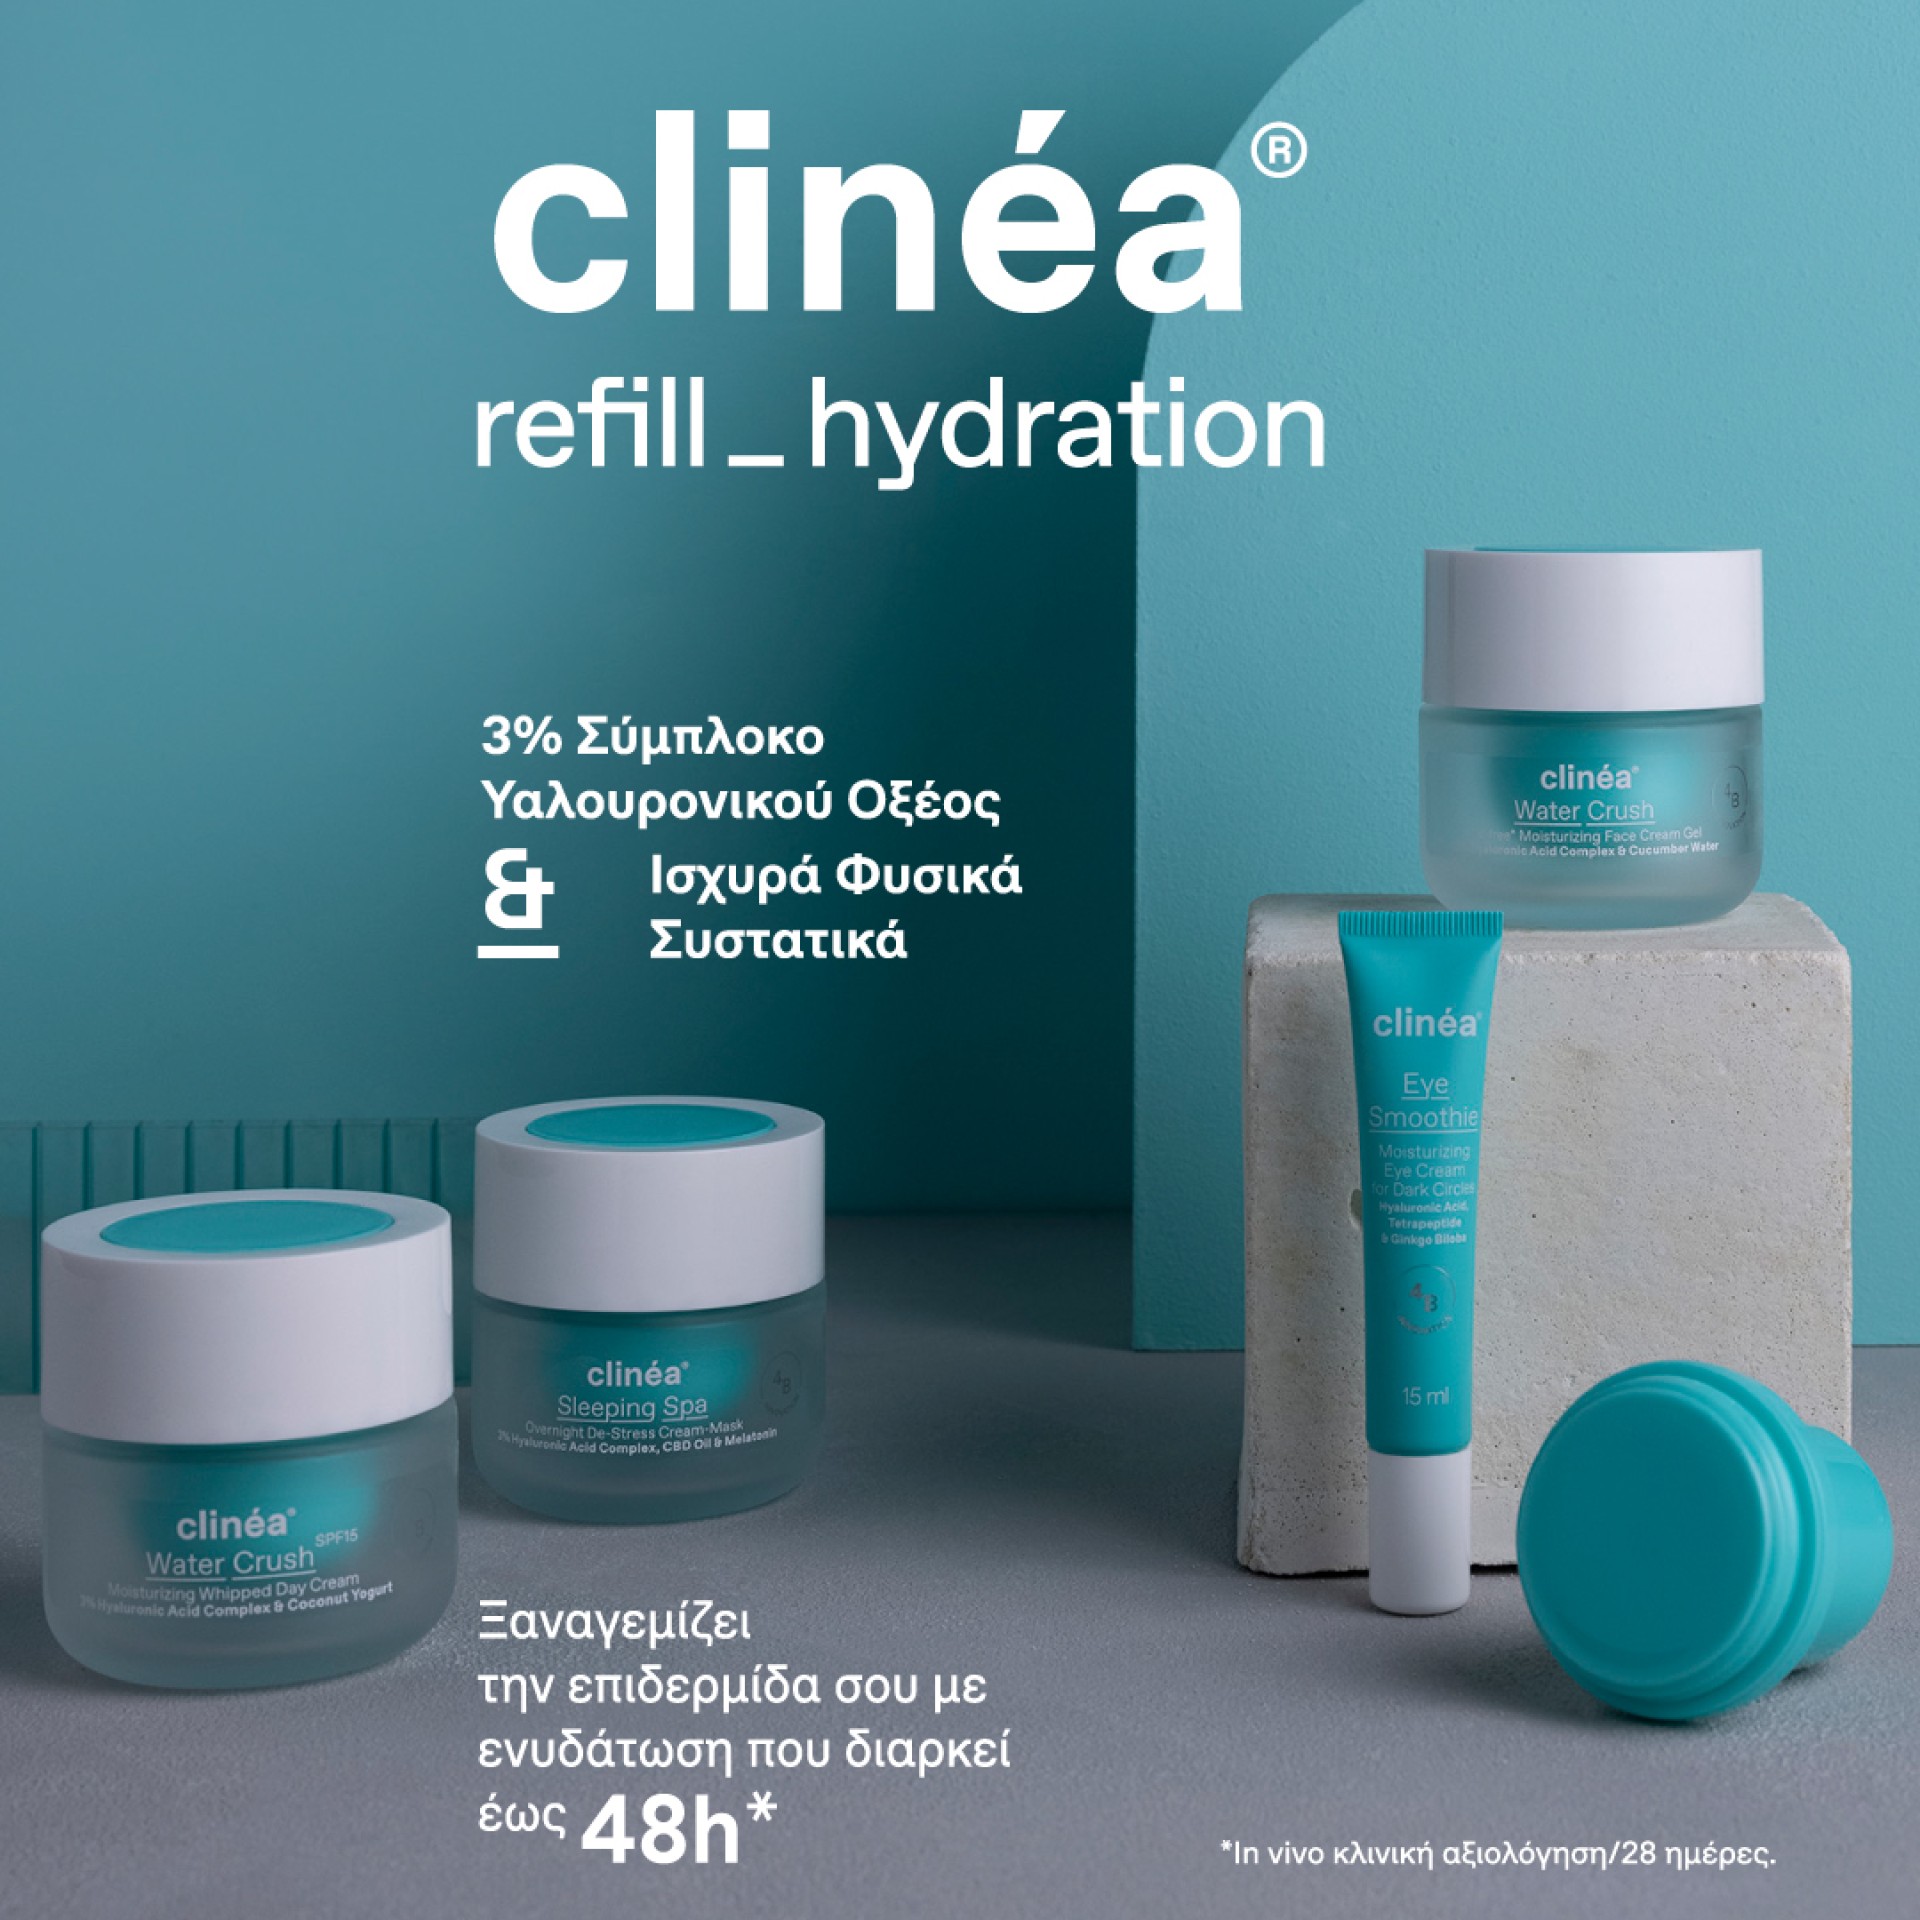 CLINEA refill hydration